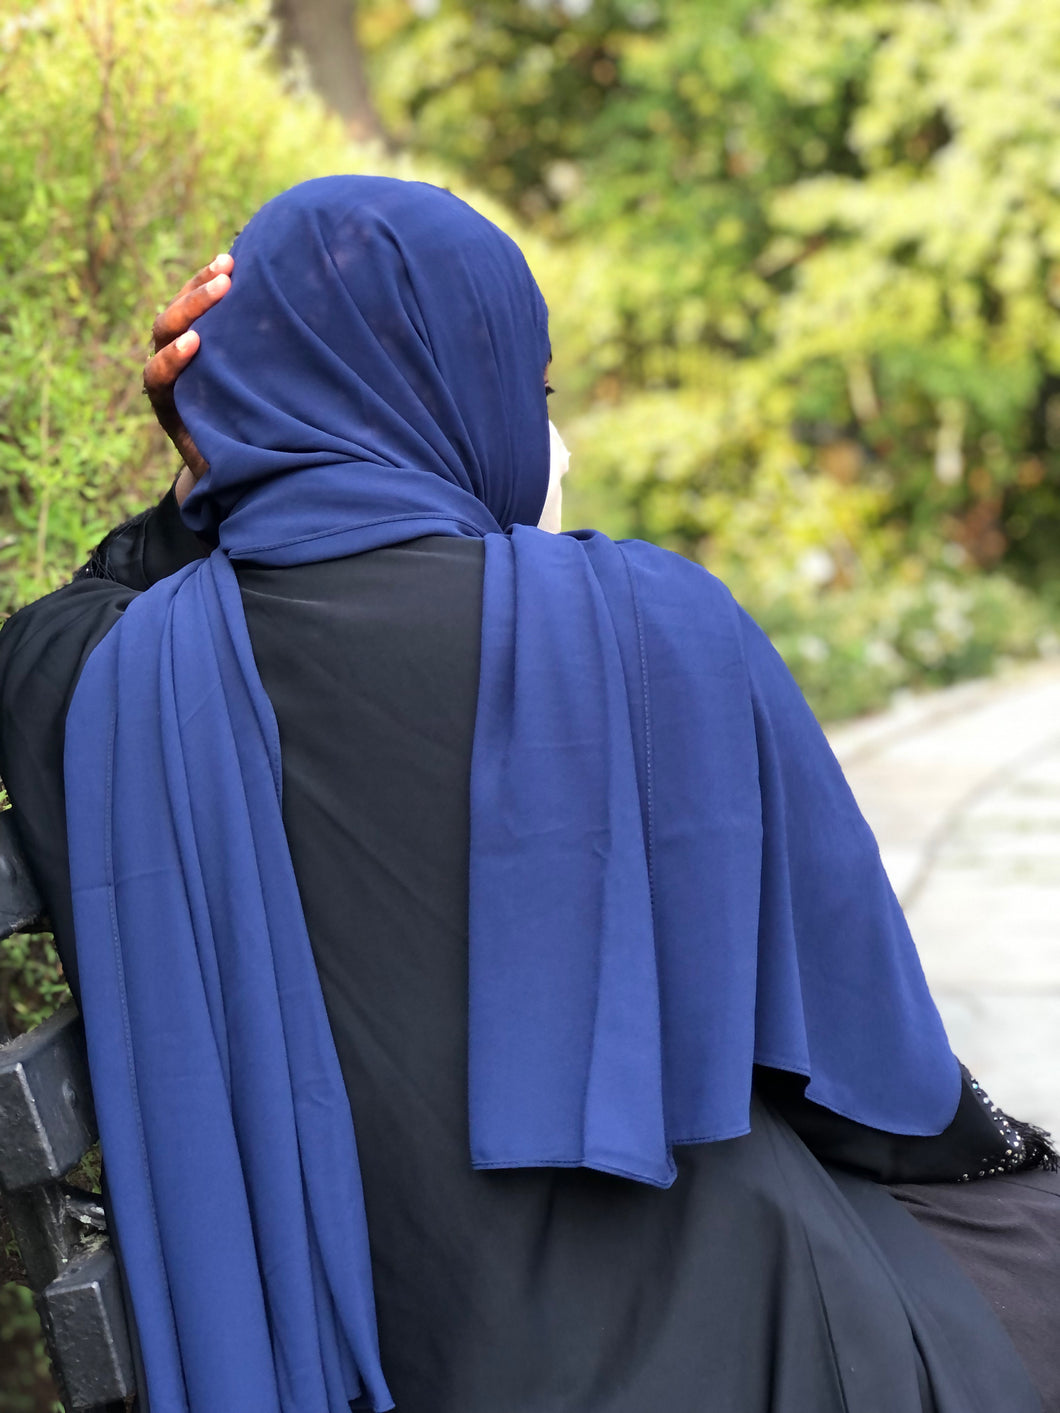 Everyday Chiffon Hijab - Navy Blue